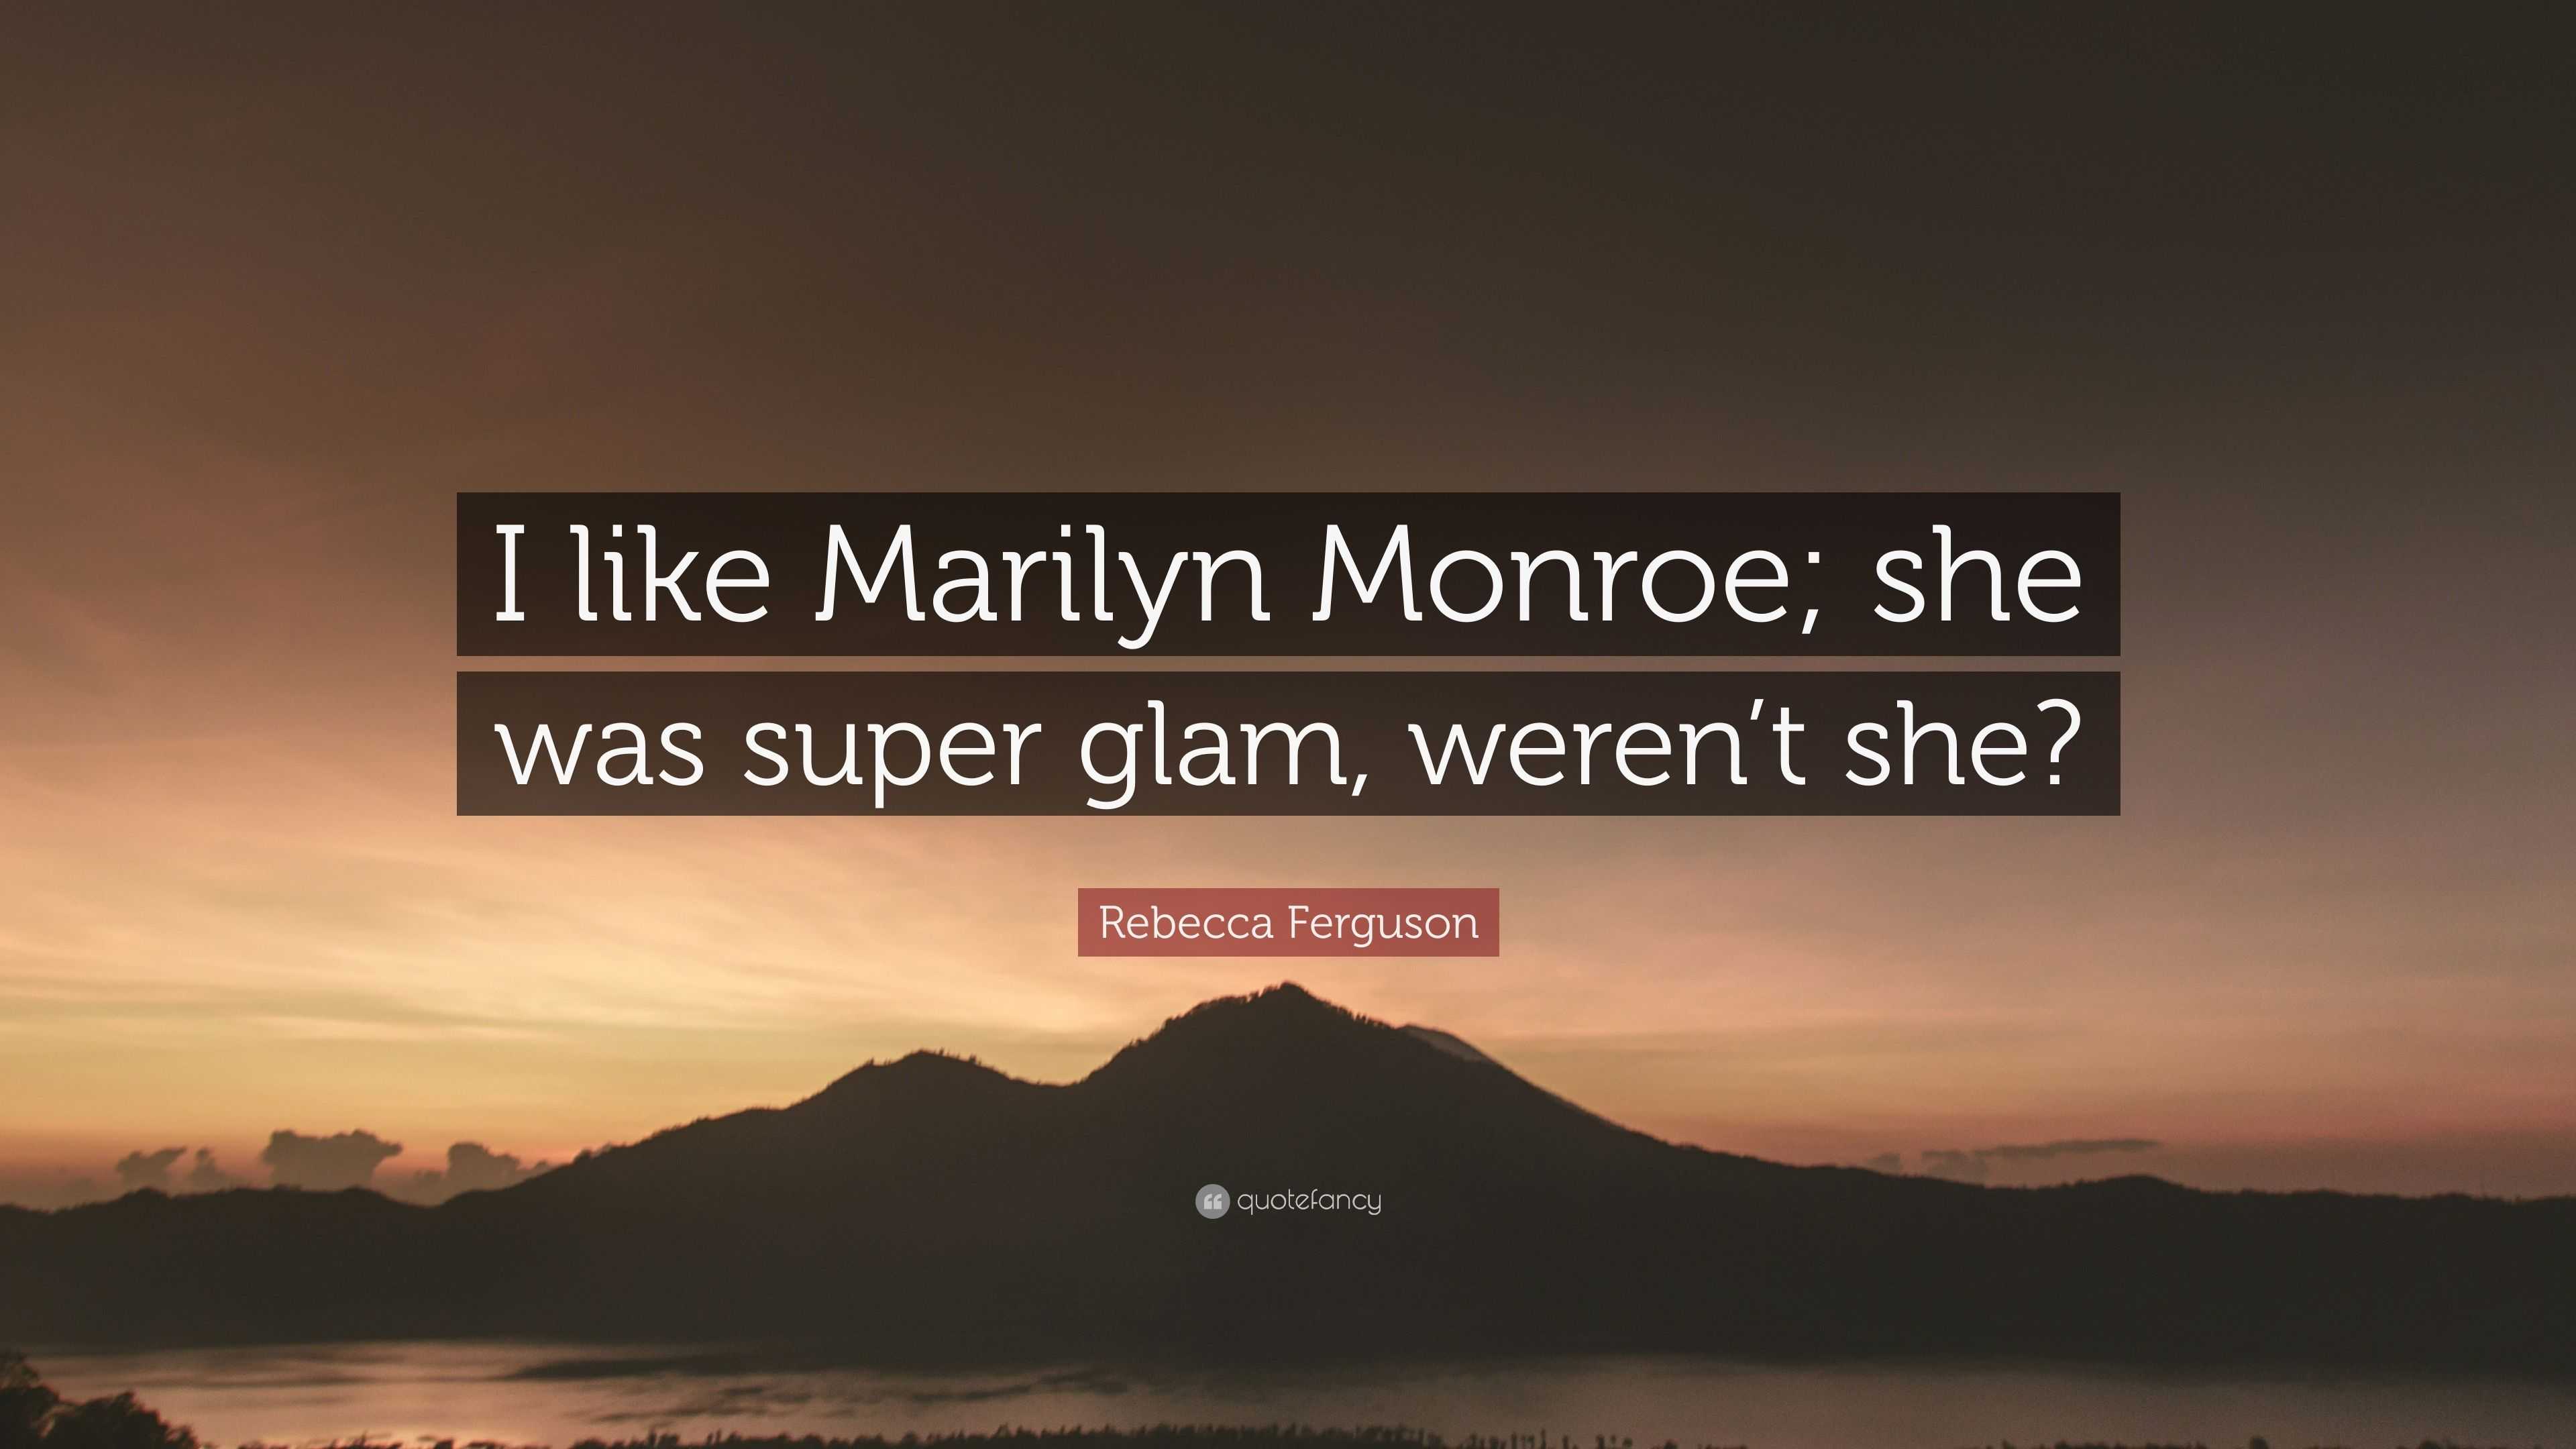 Rebecca Ferguson Quote: “I like Marilyn Monroe; she was super glam